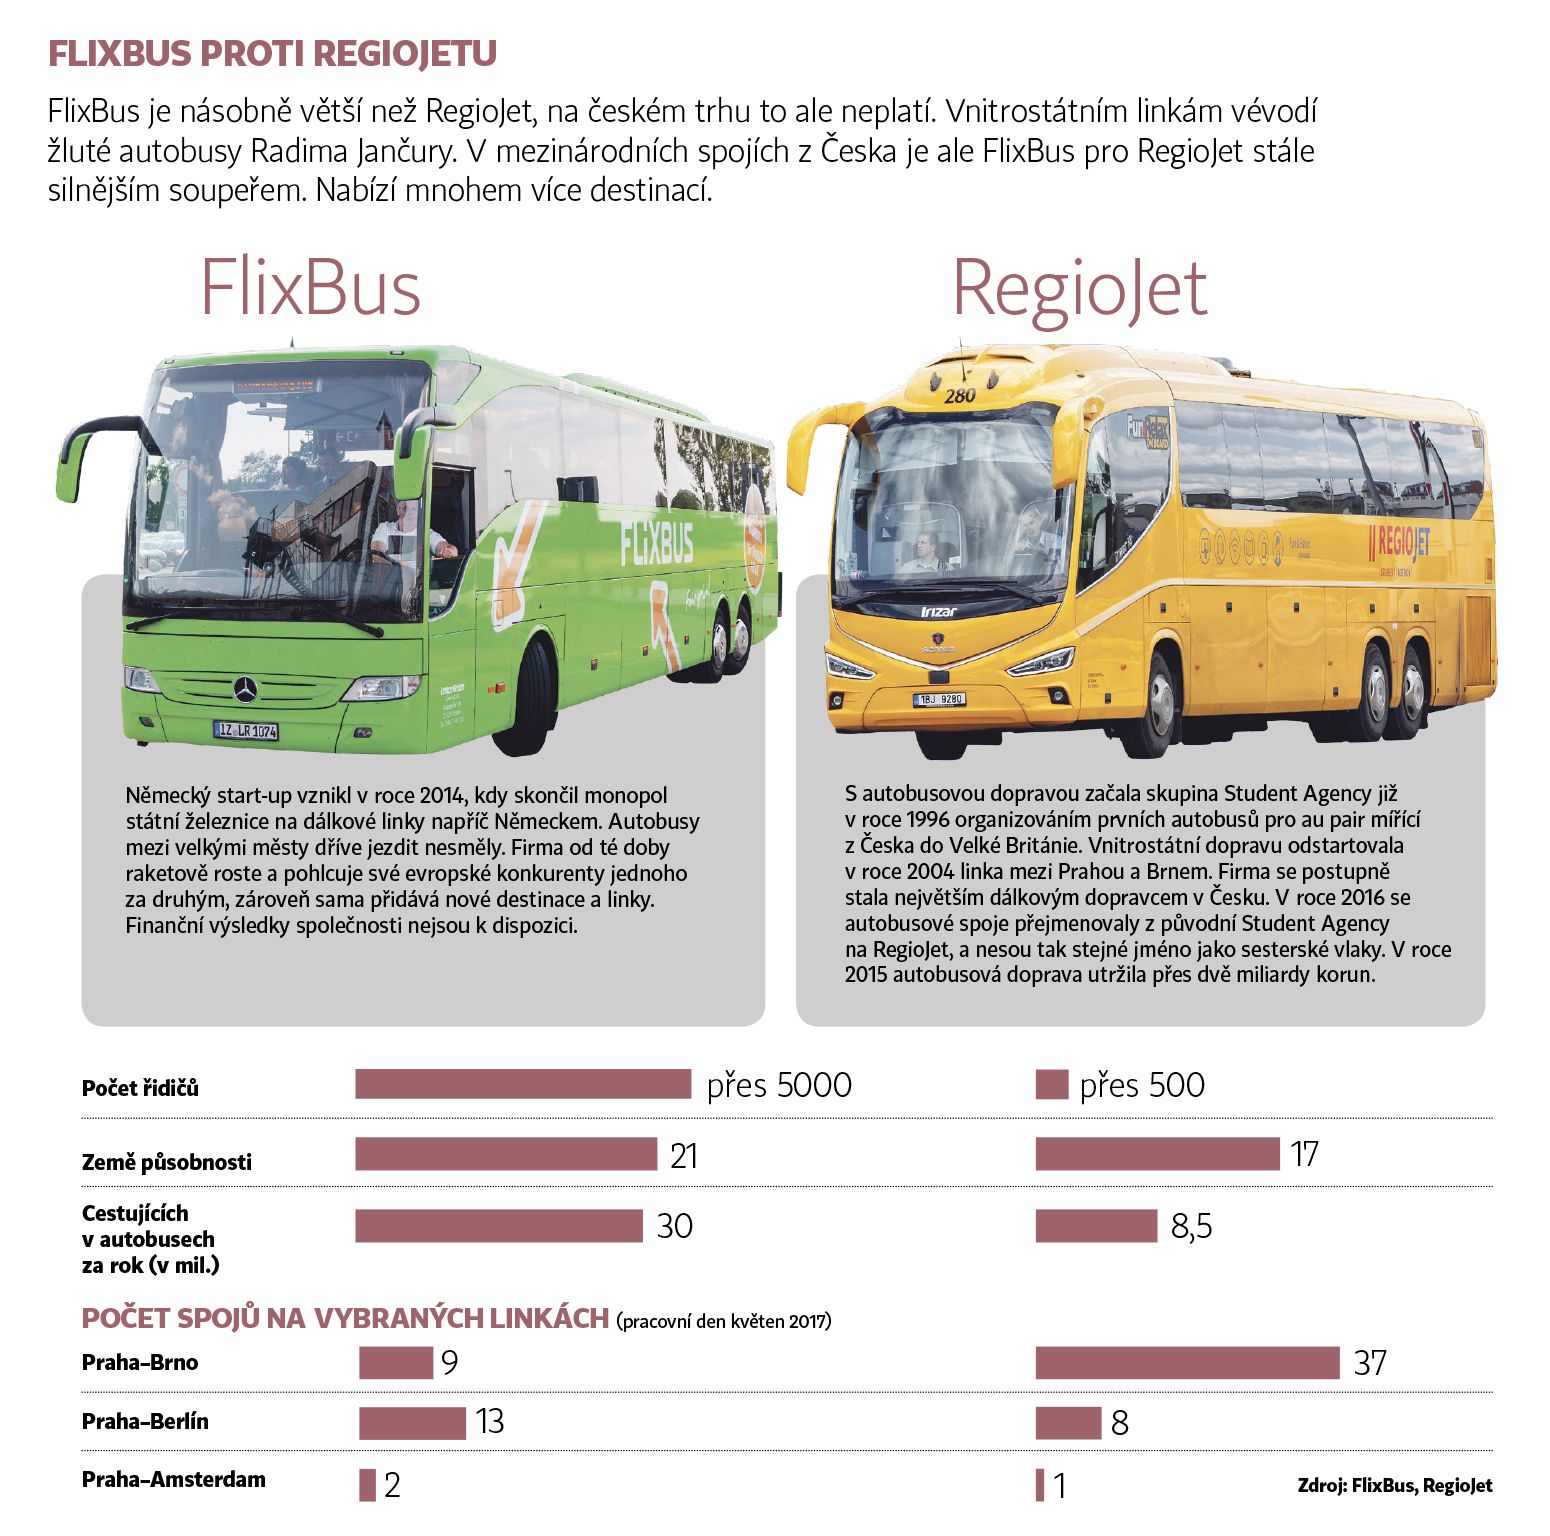 FlixBus versus RegioJet